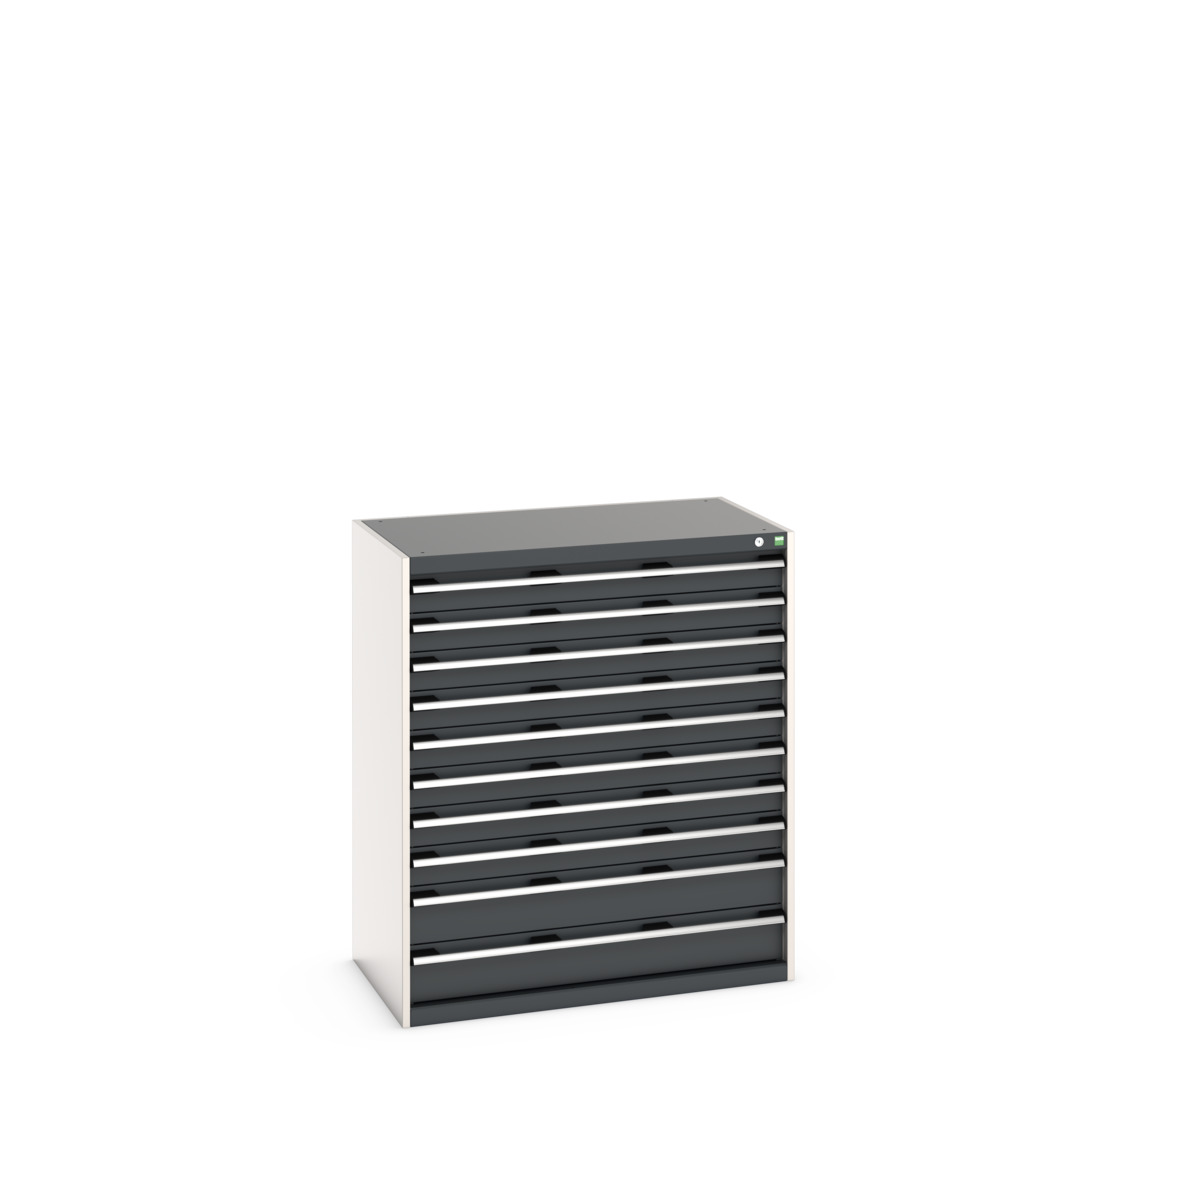 40021041. - cubio drawer cabinet